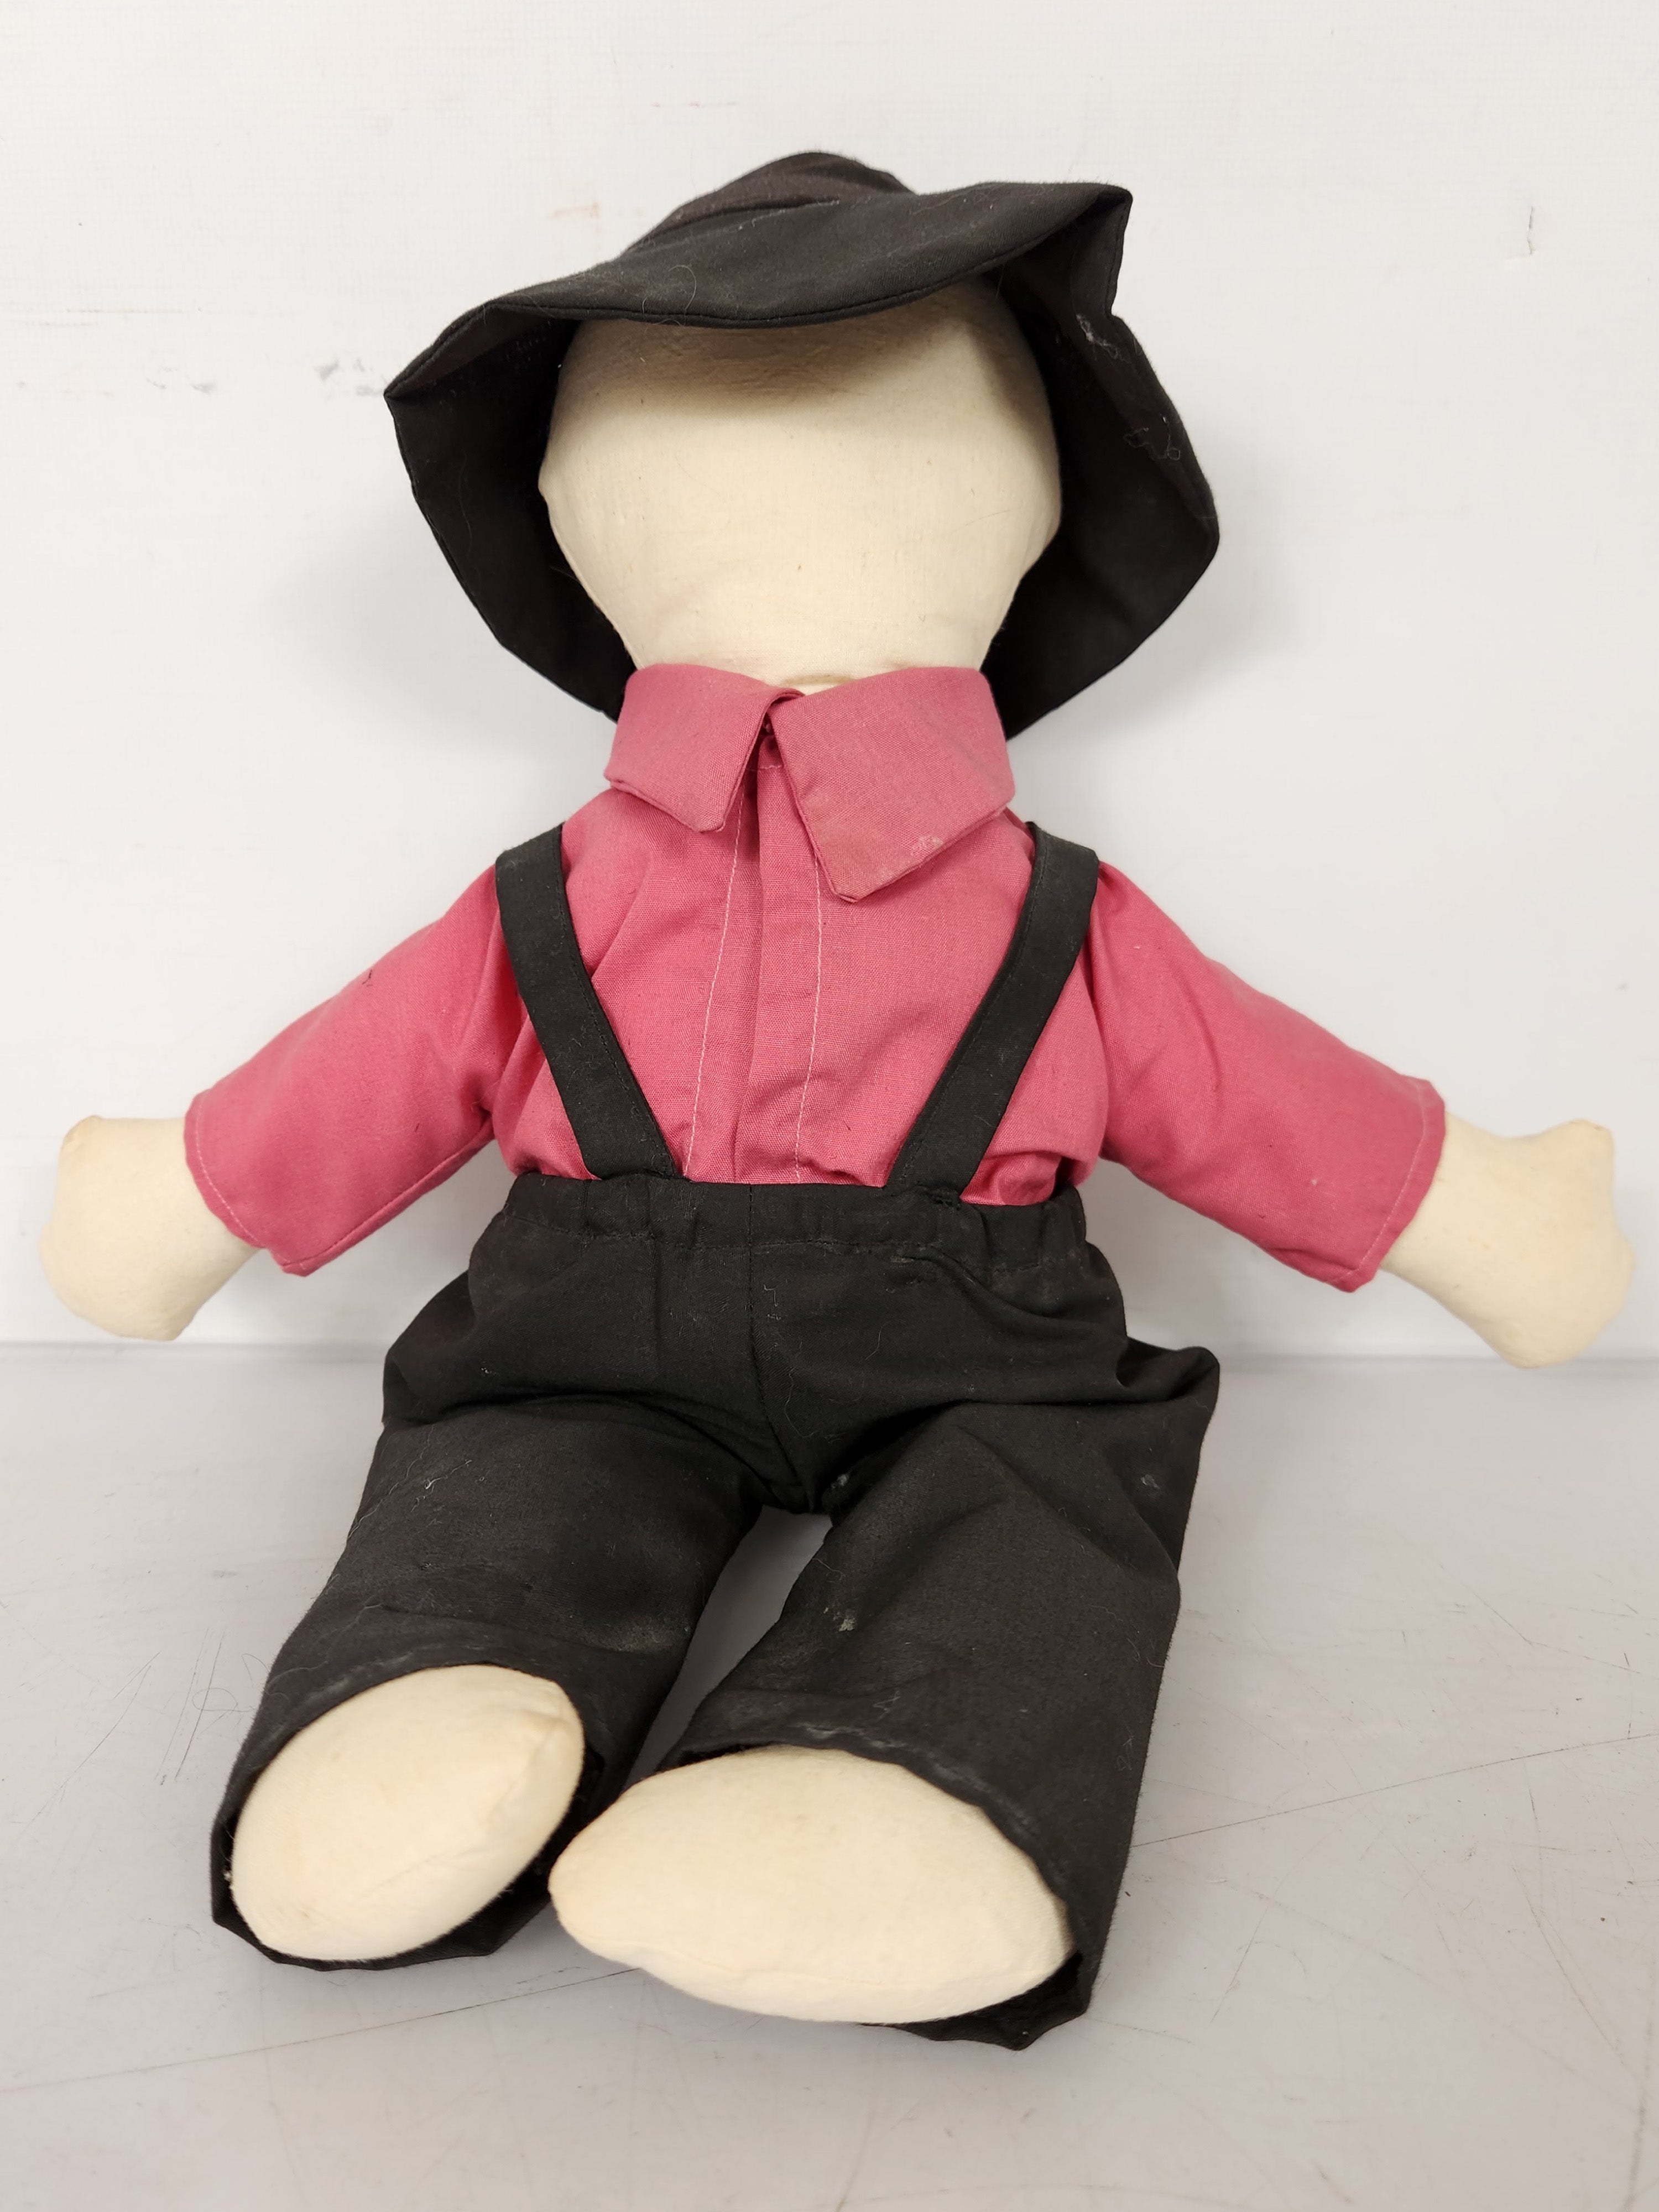 Handmade Amish Faceless 15" Male Doll